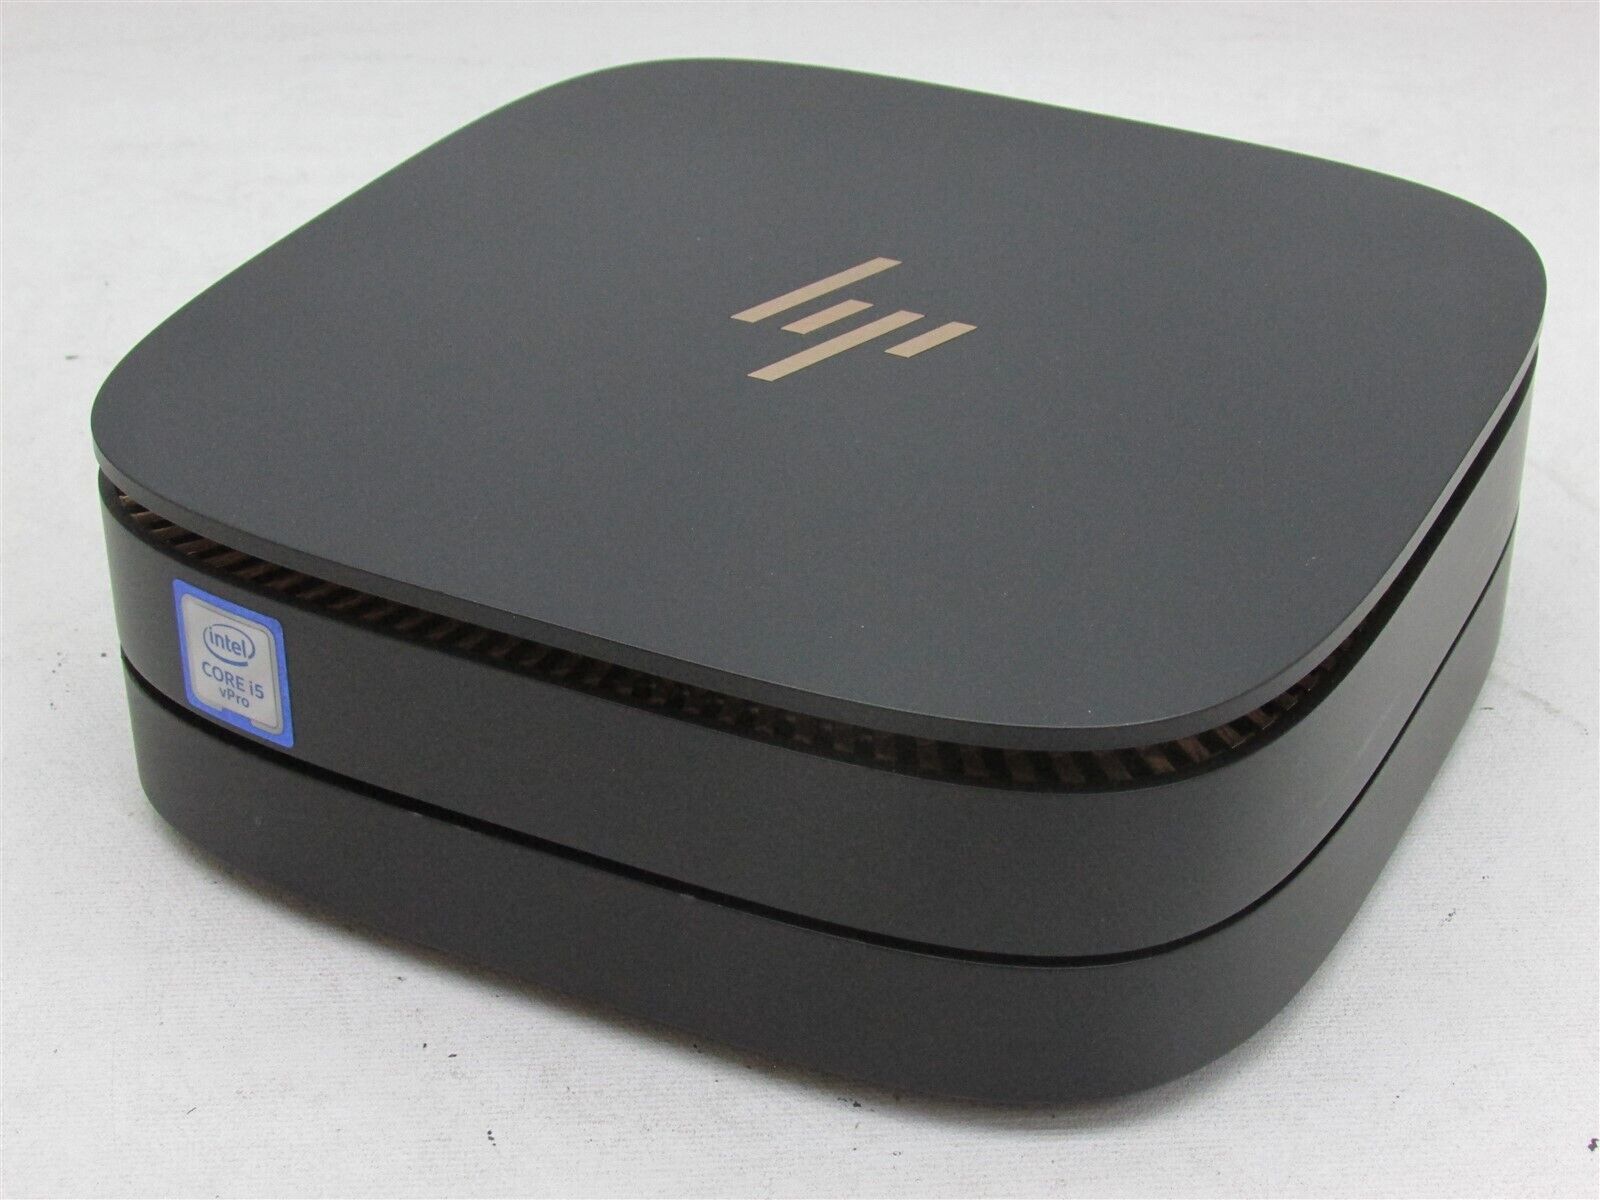 HP Elite Slice G2 MS i5-7500T 2.7GHz 8GB RAM 128GB m.2 Windows 10 Home Mini PC